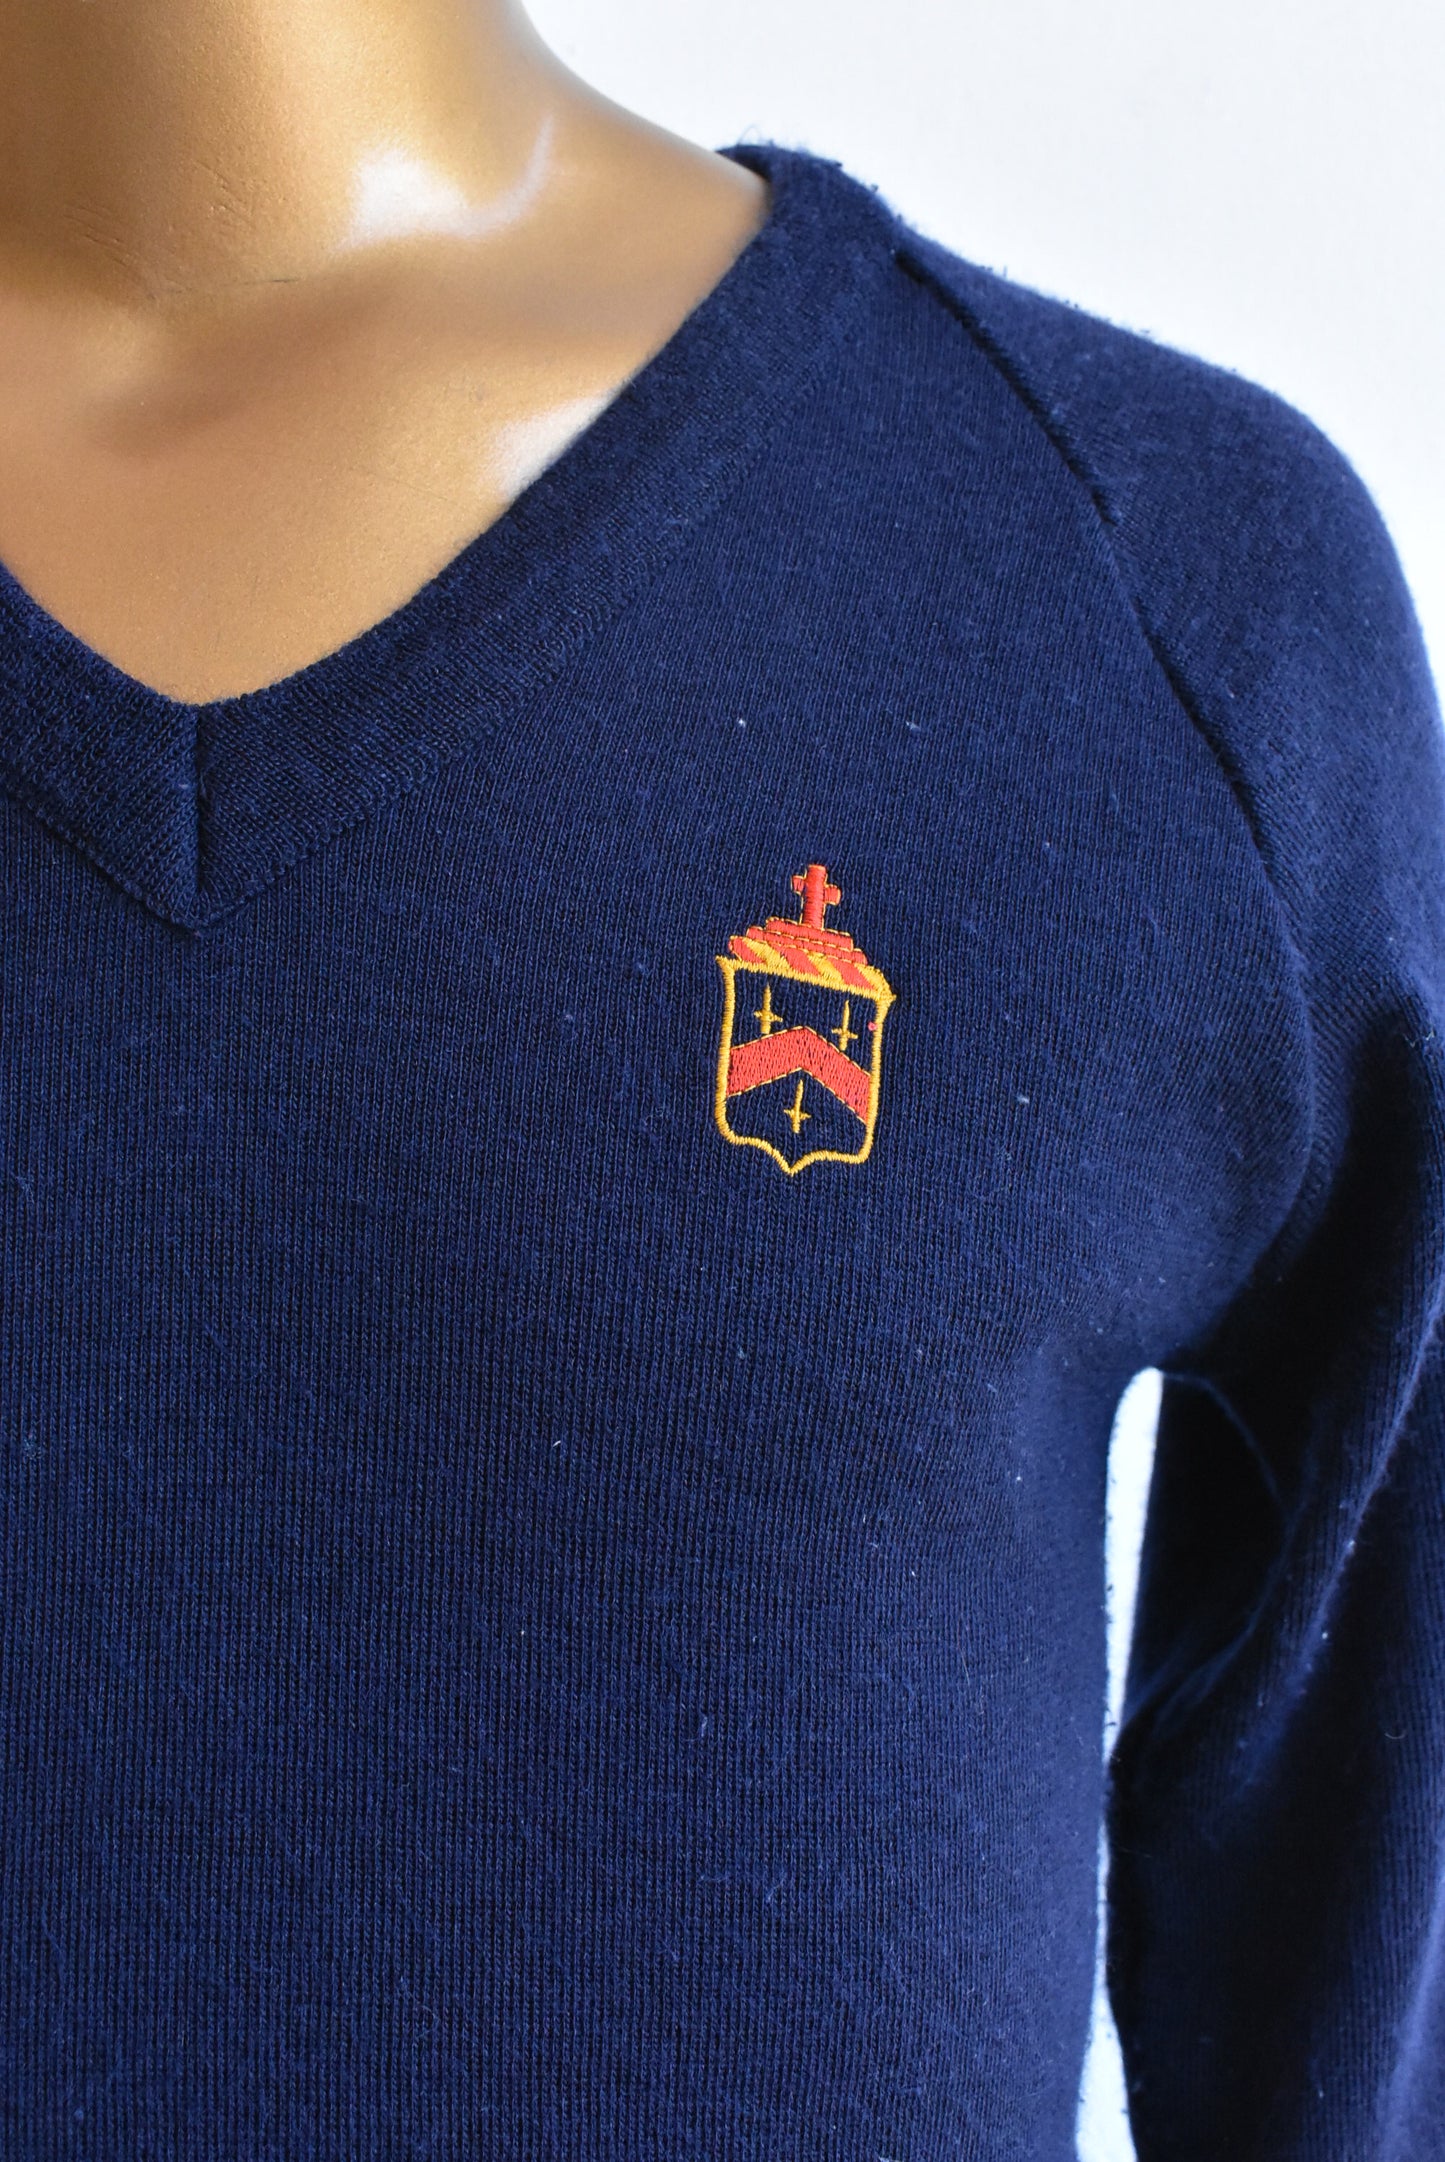 John McGlashan College Classwear navy wool school jersey, 92cm